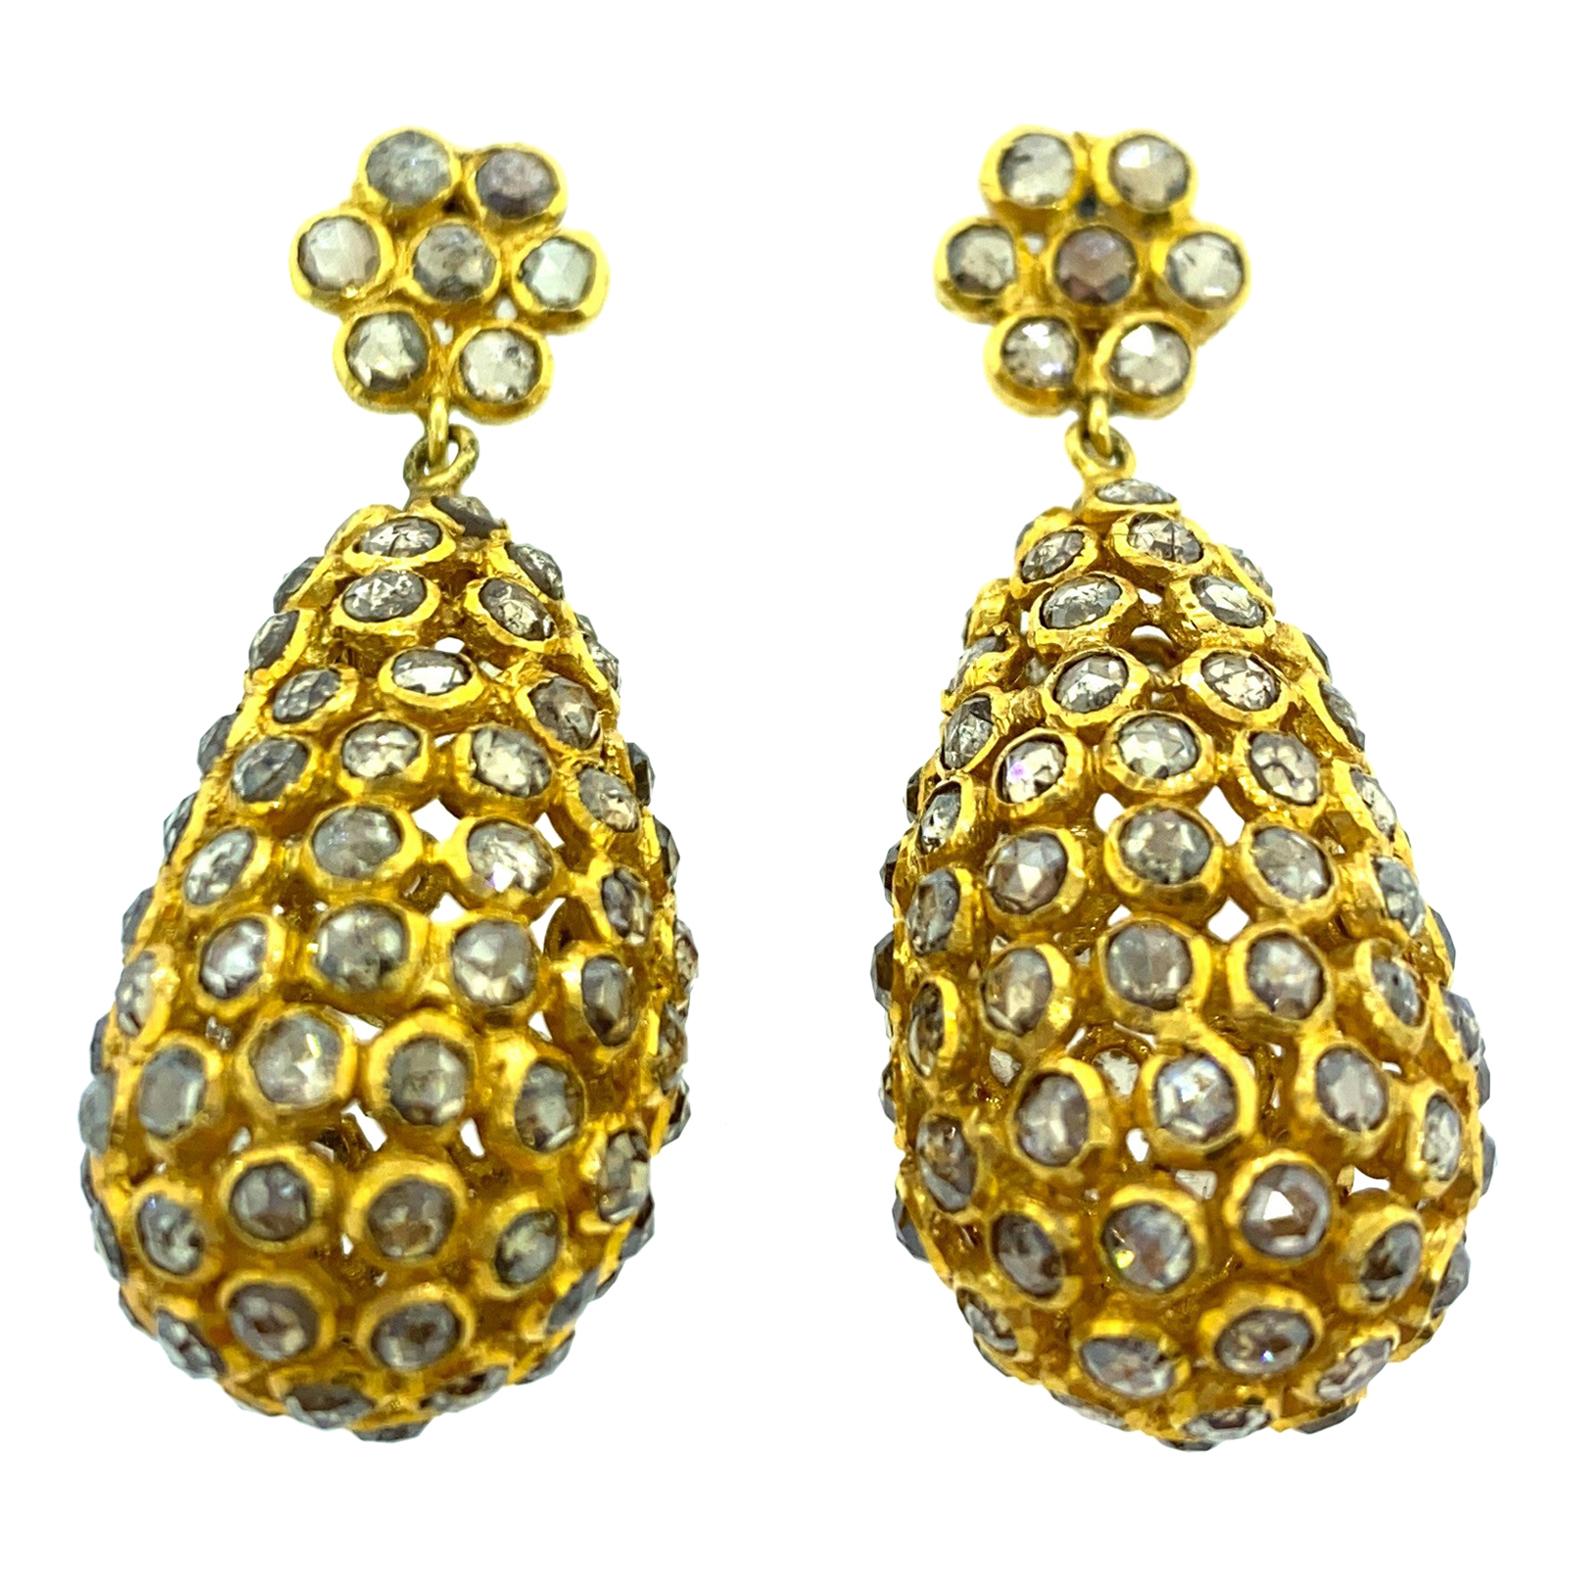 10 Carat Diamond Earring in 18 Karat Yellow Gold For Sale